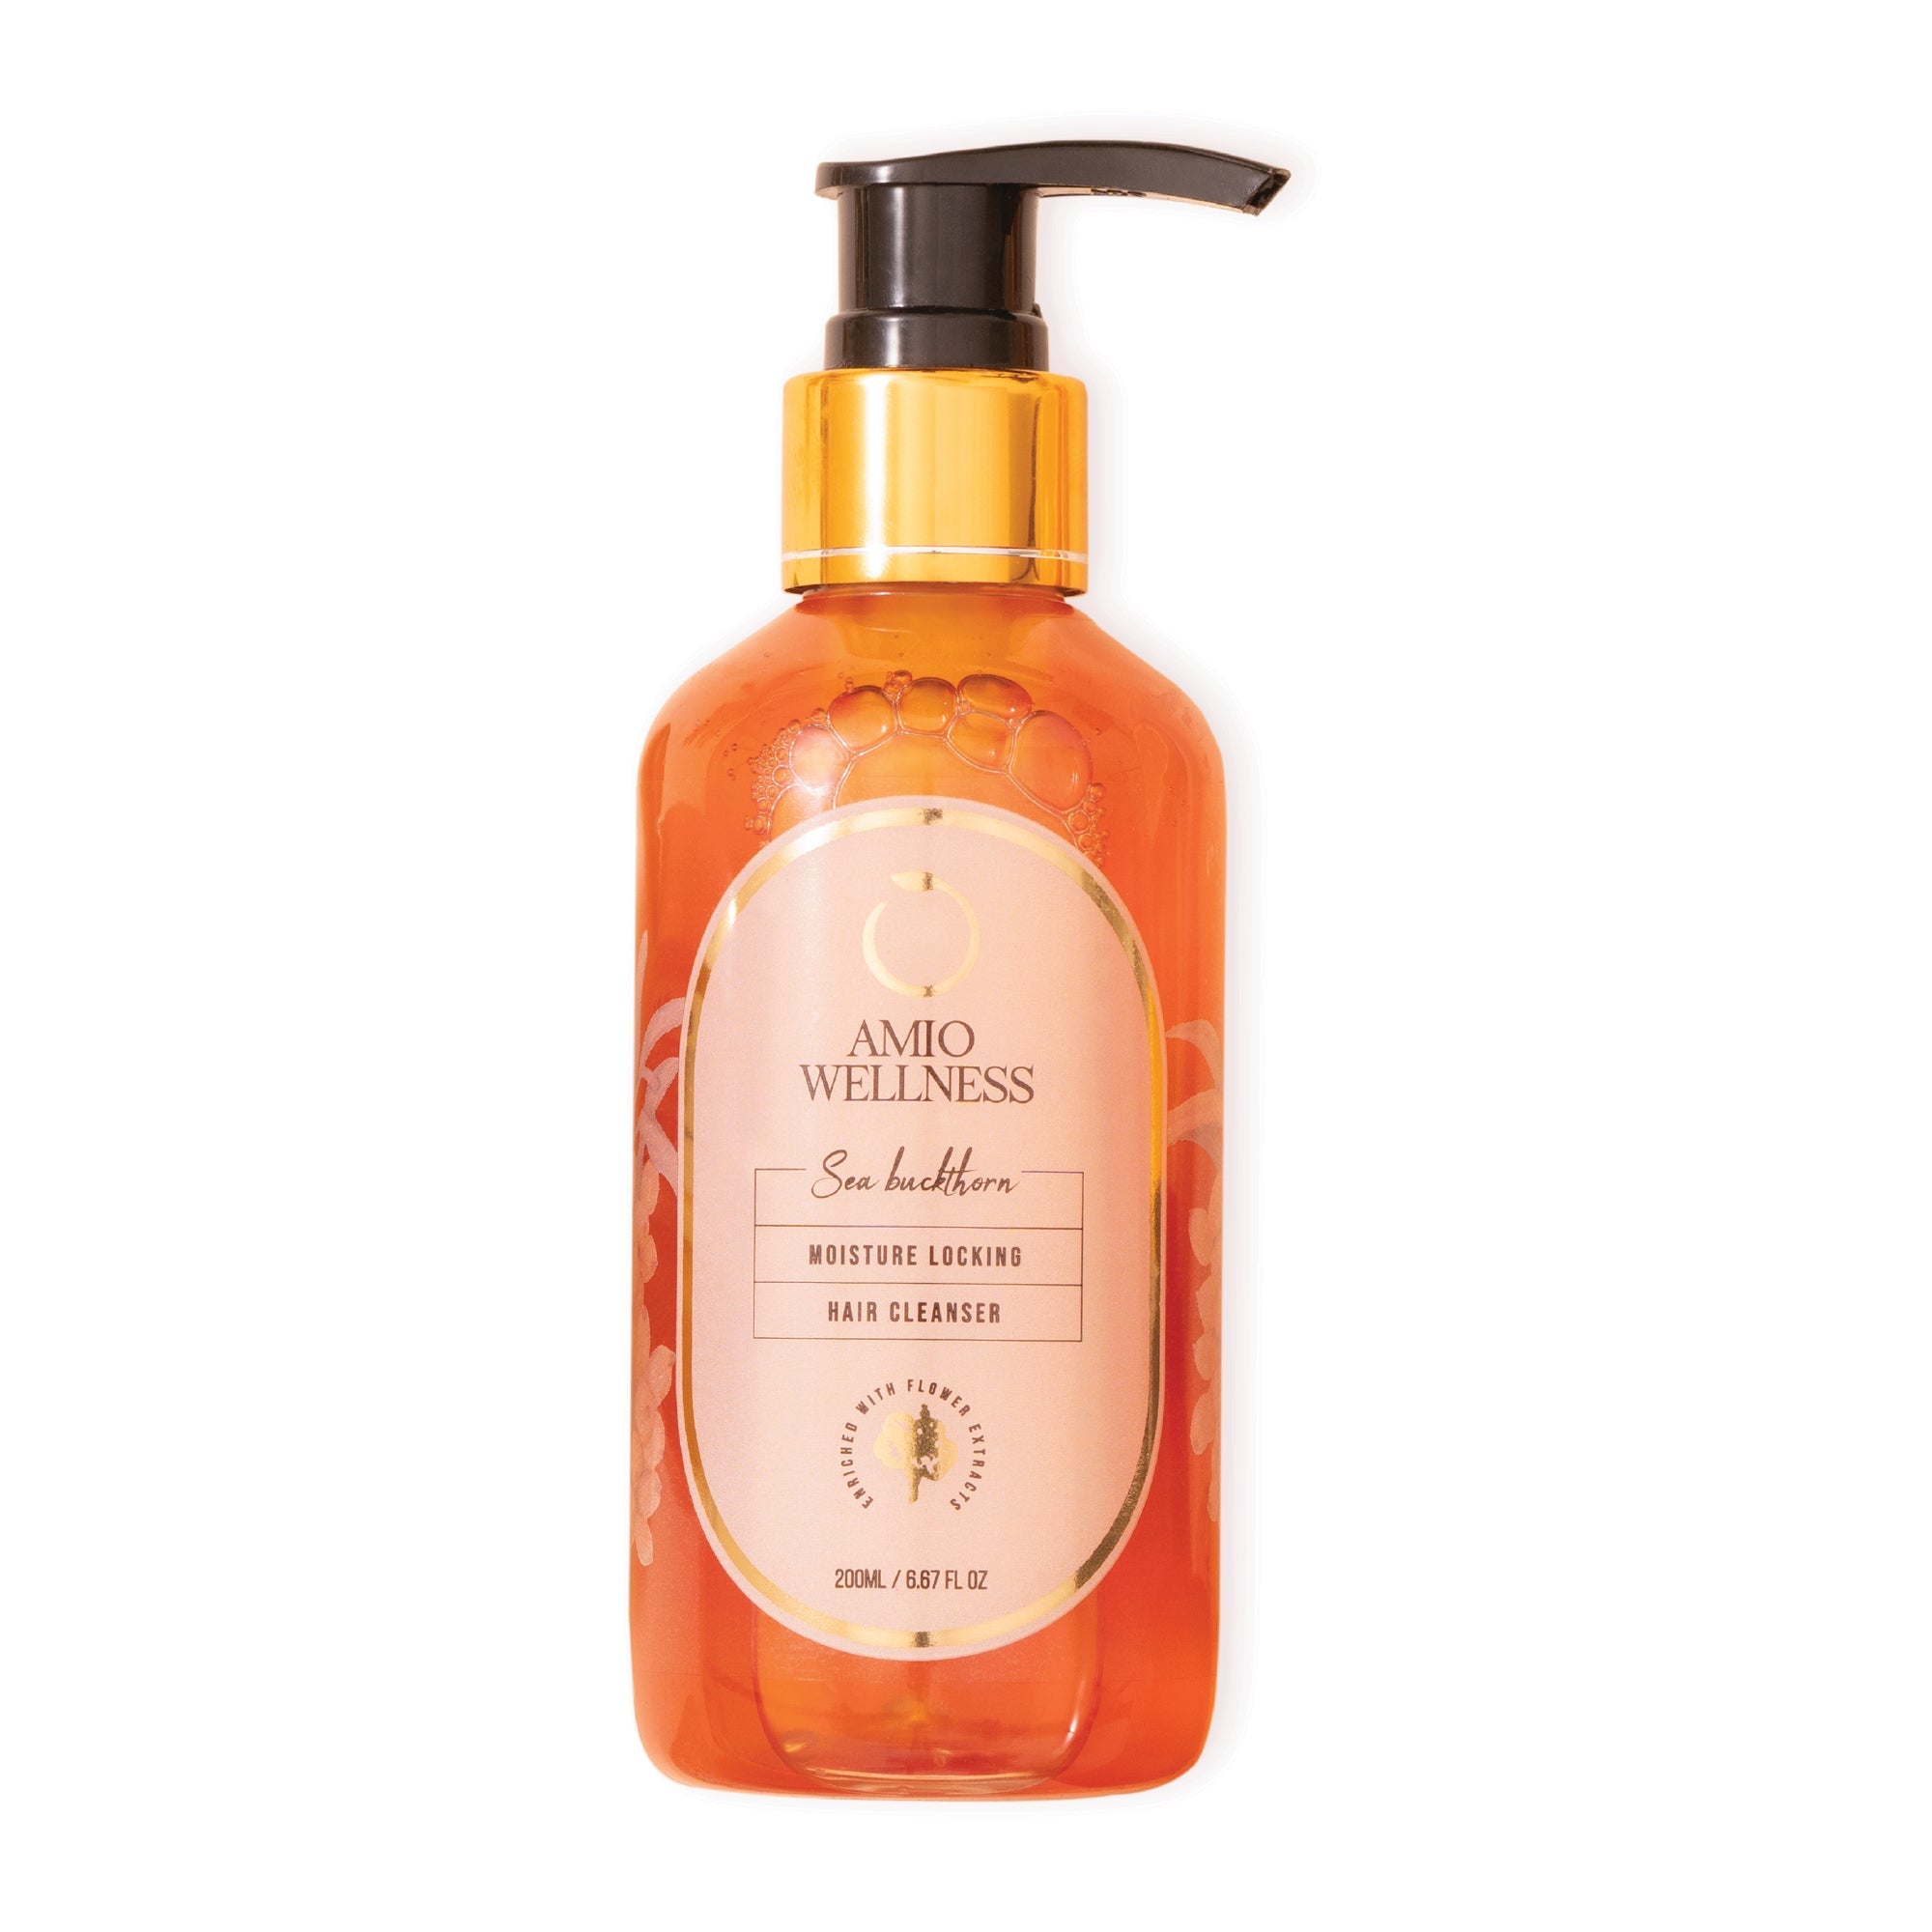 Amio Wellness Seabuckthorn Shampoo | Helps reduce frizziness, adds shine |200ml